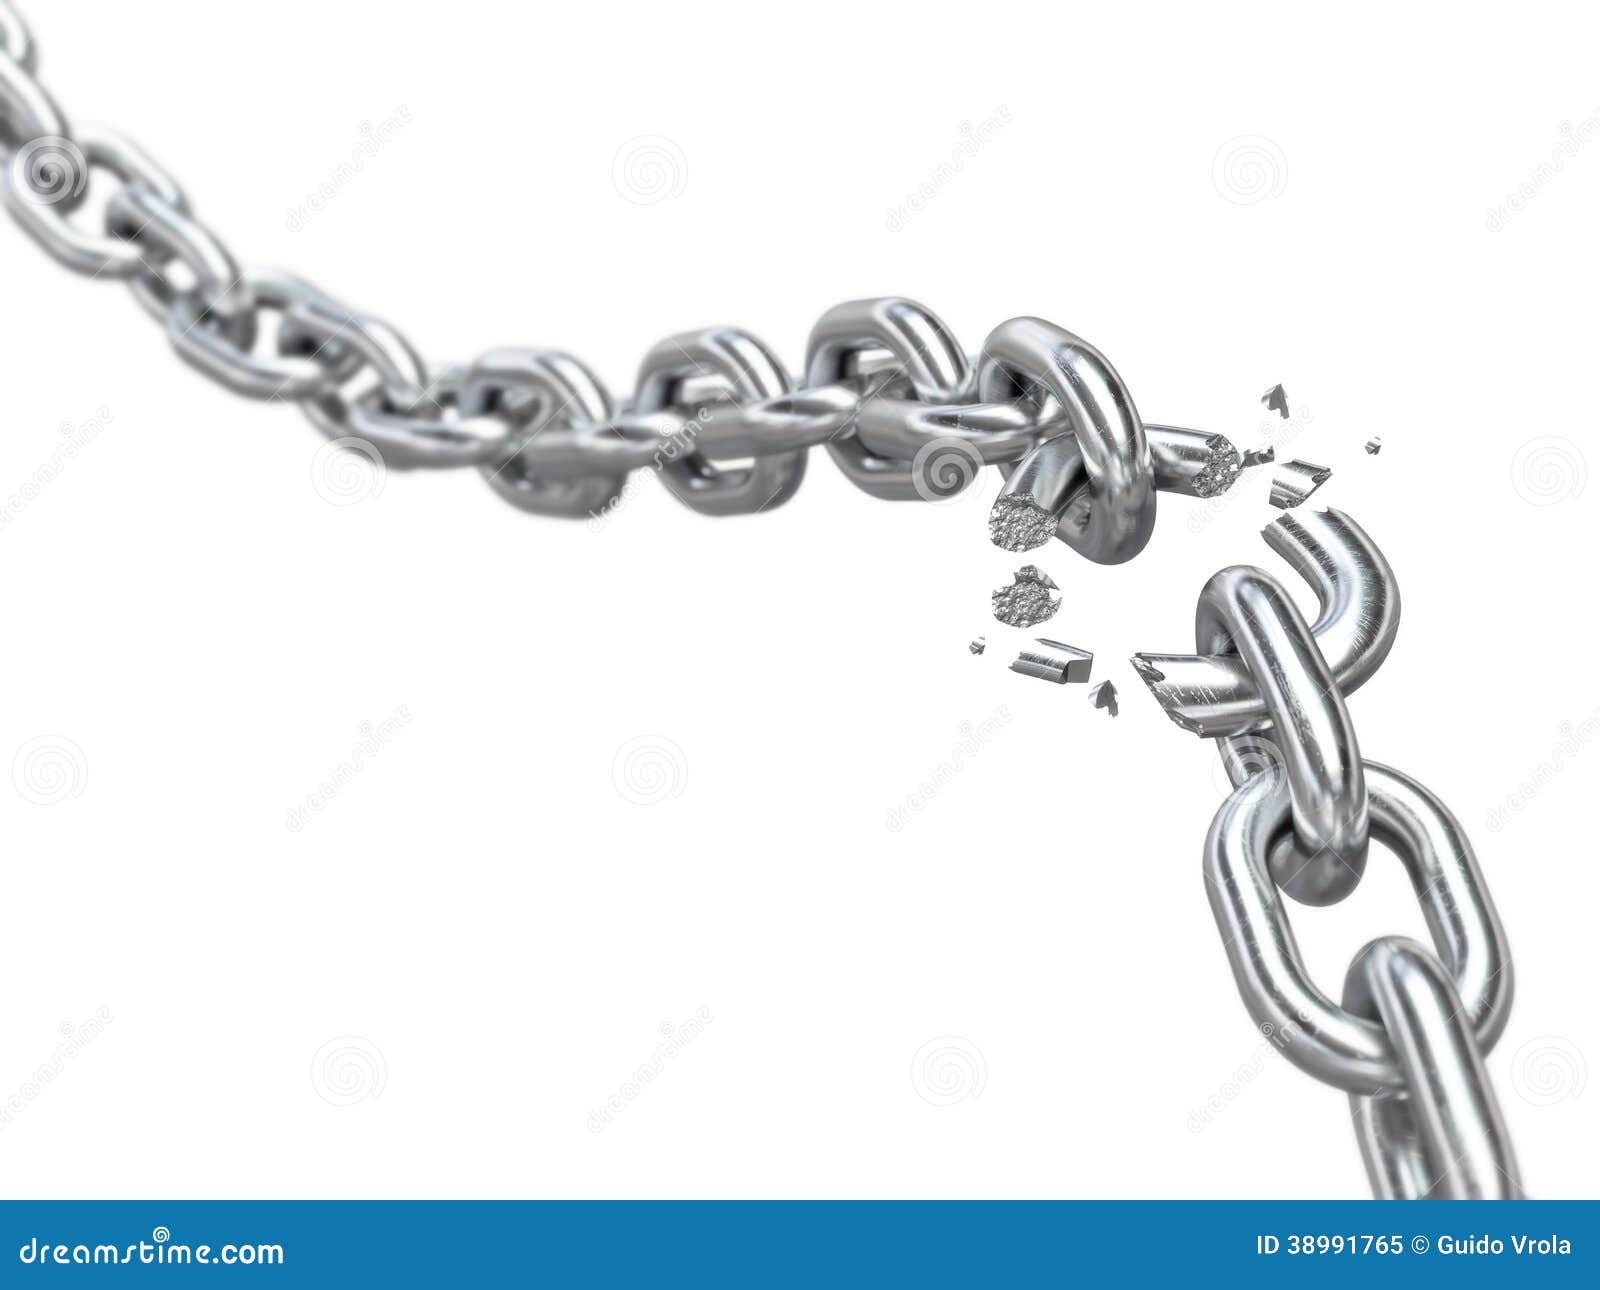 Breaking chain stock illustration. Illustration of broken